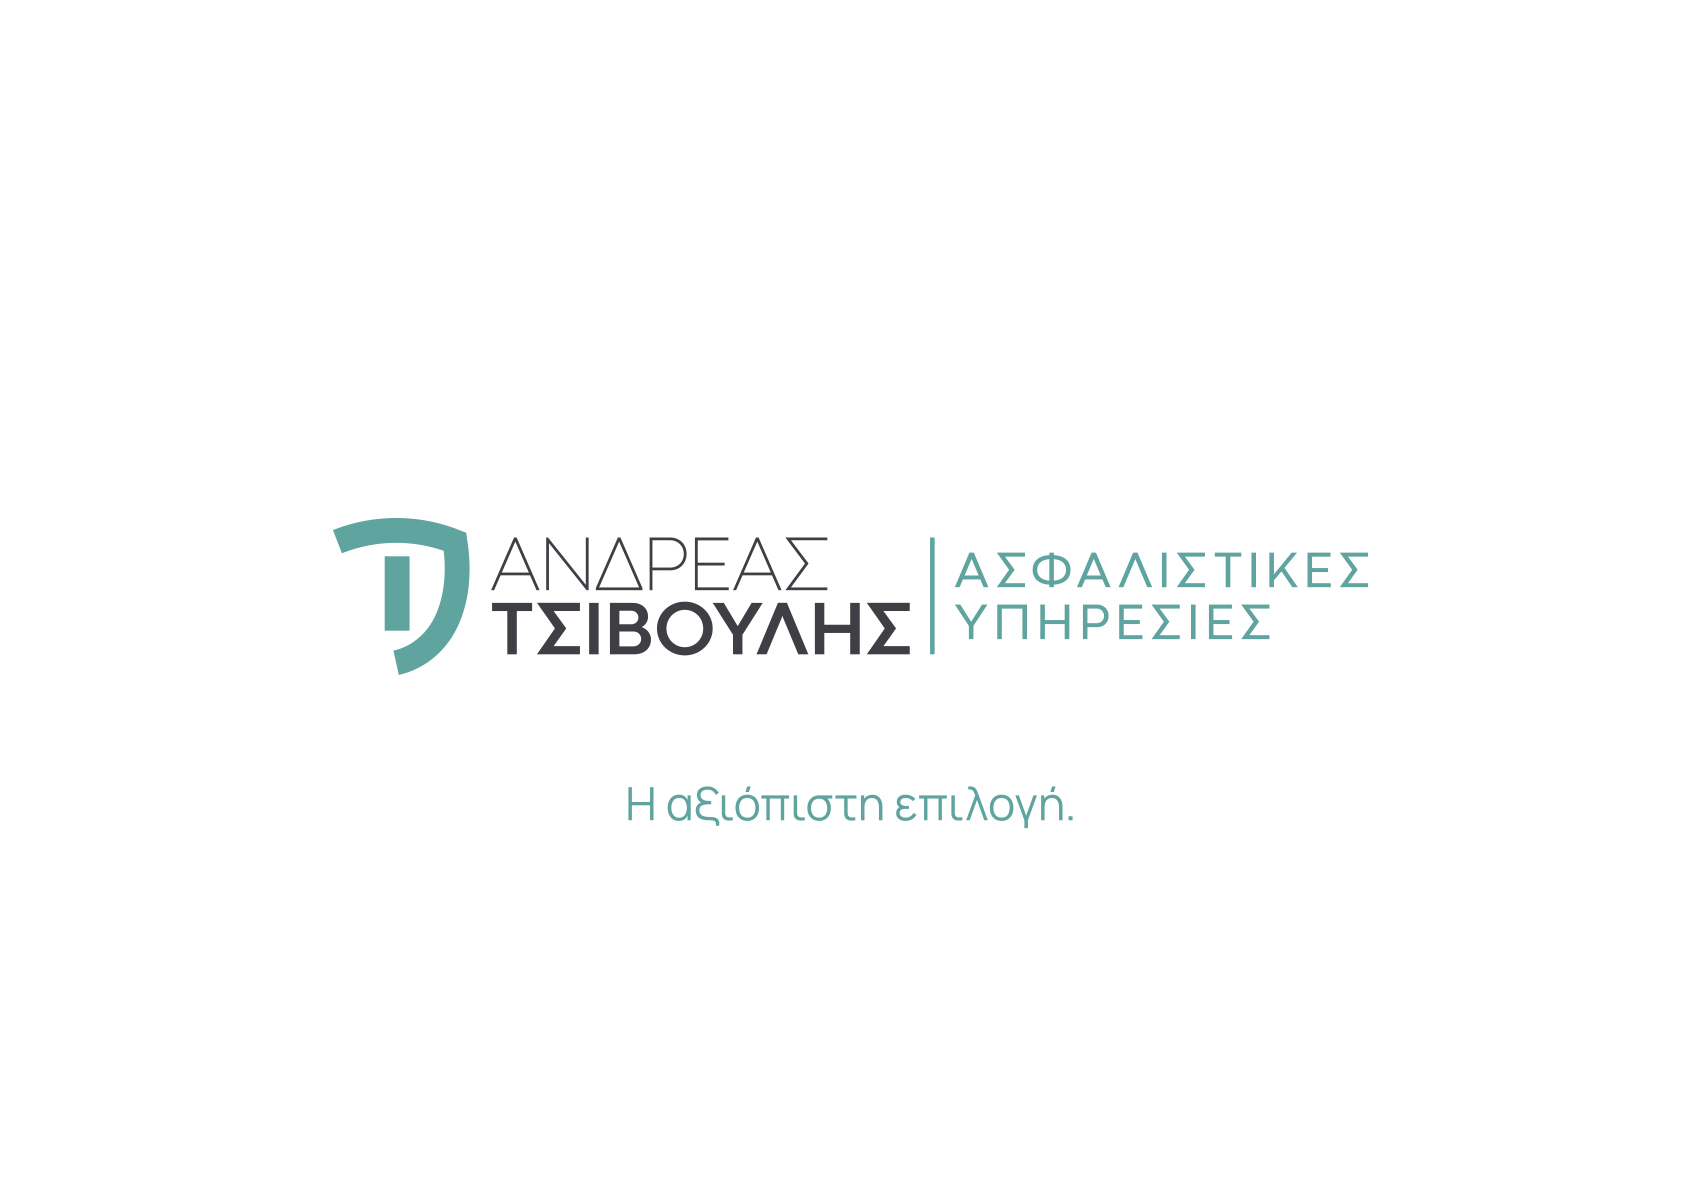 Andreas Tsivoulis logo white 1700x1200 by xhristakis